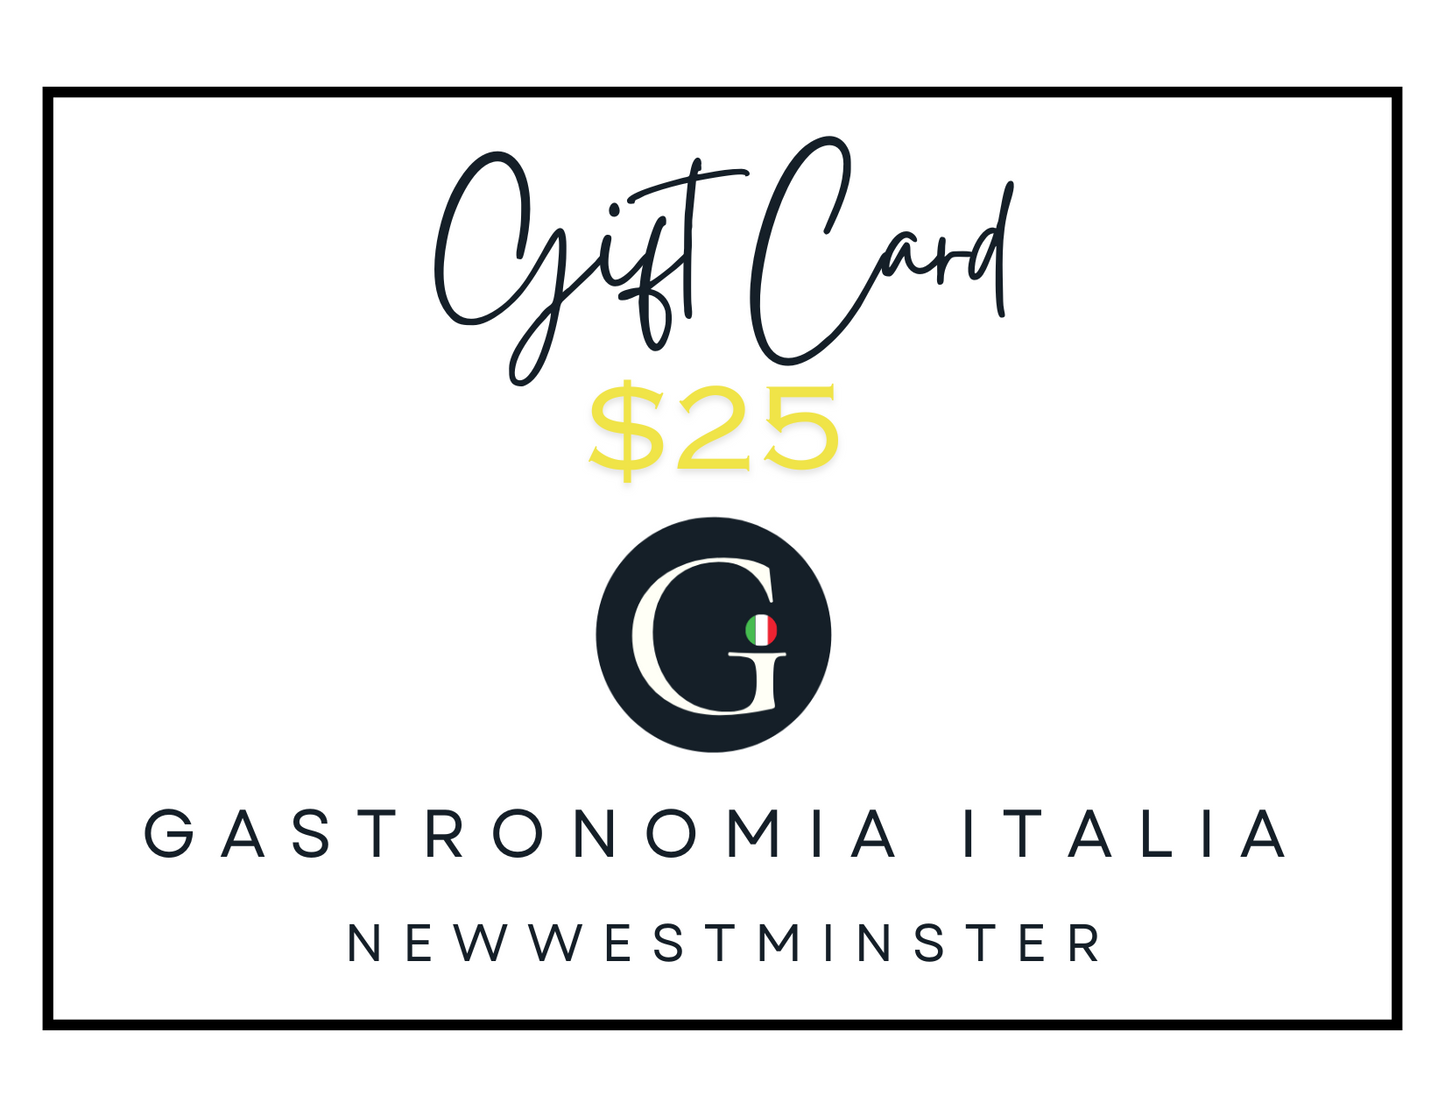 GIFT CARD - Gastronomia Italia NewWestminster